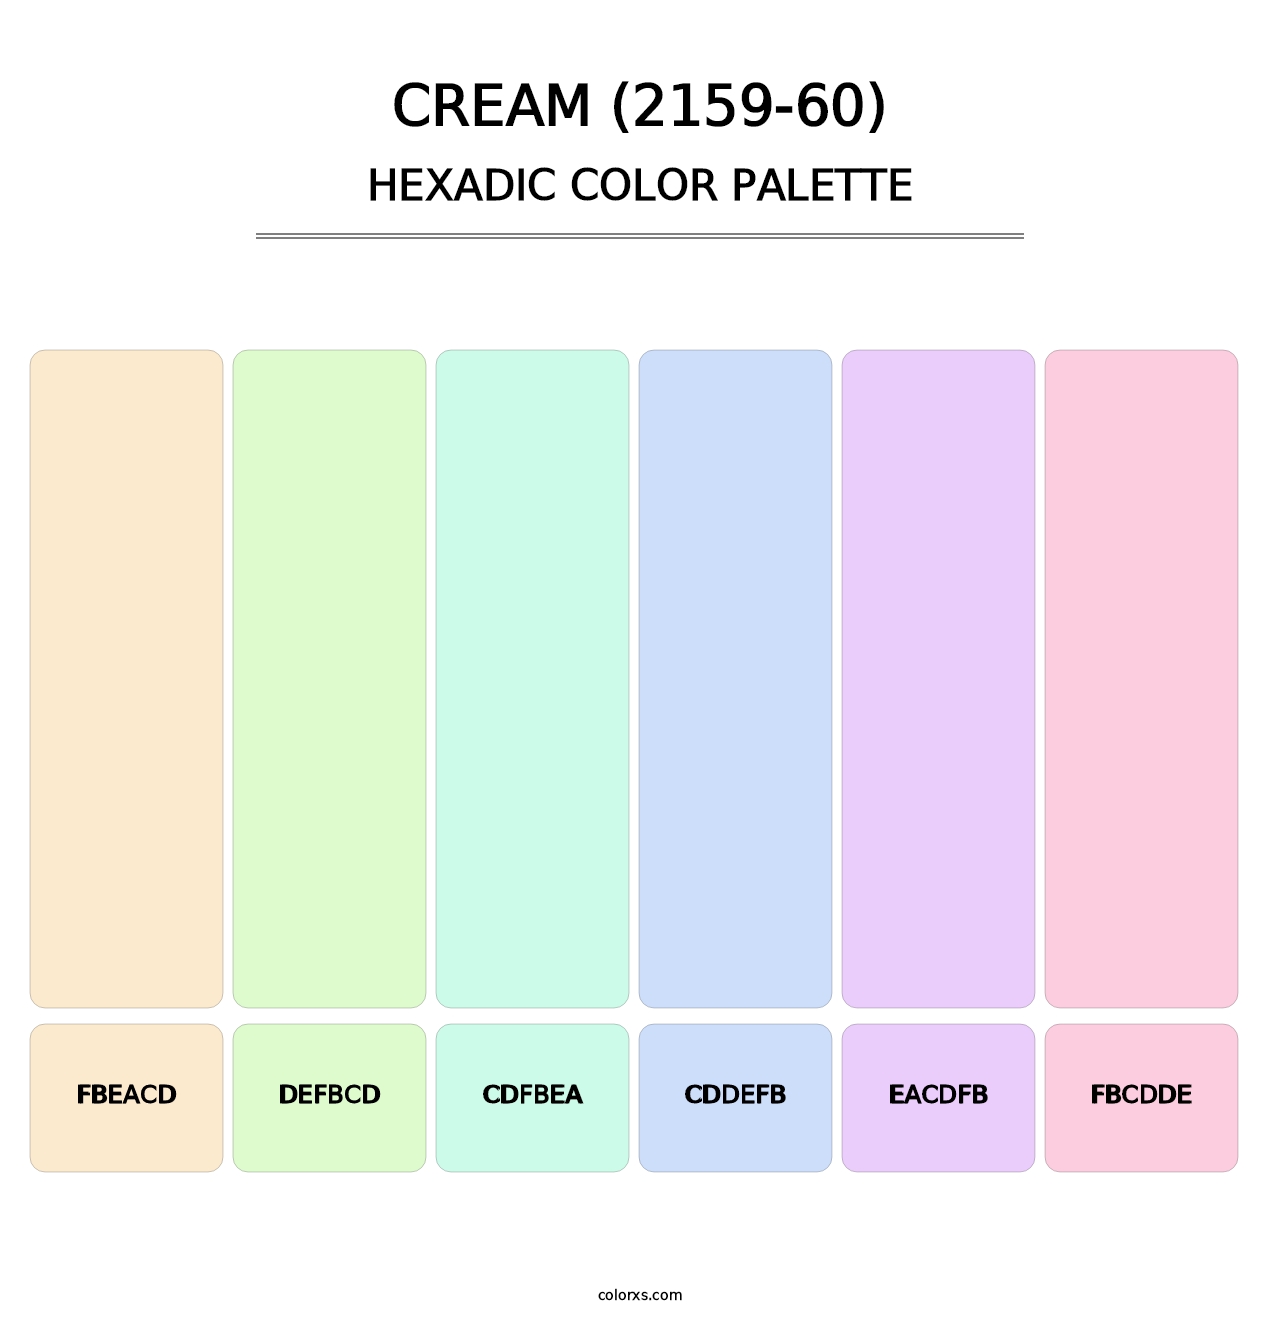 Cream (2159-60) - Hexadic Color Palette